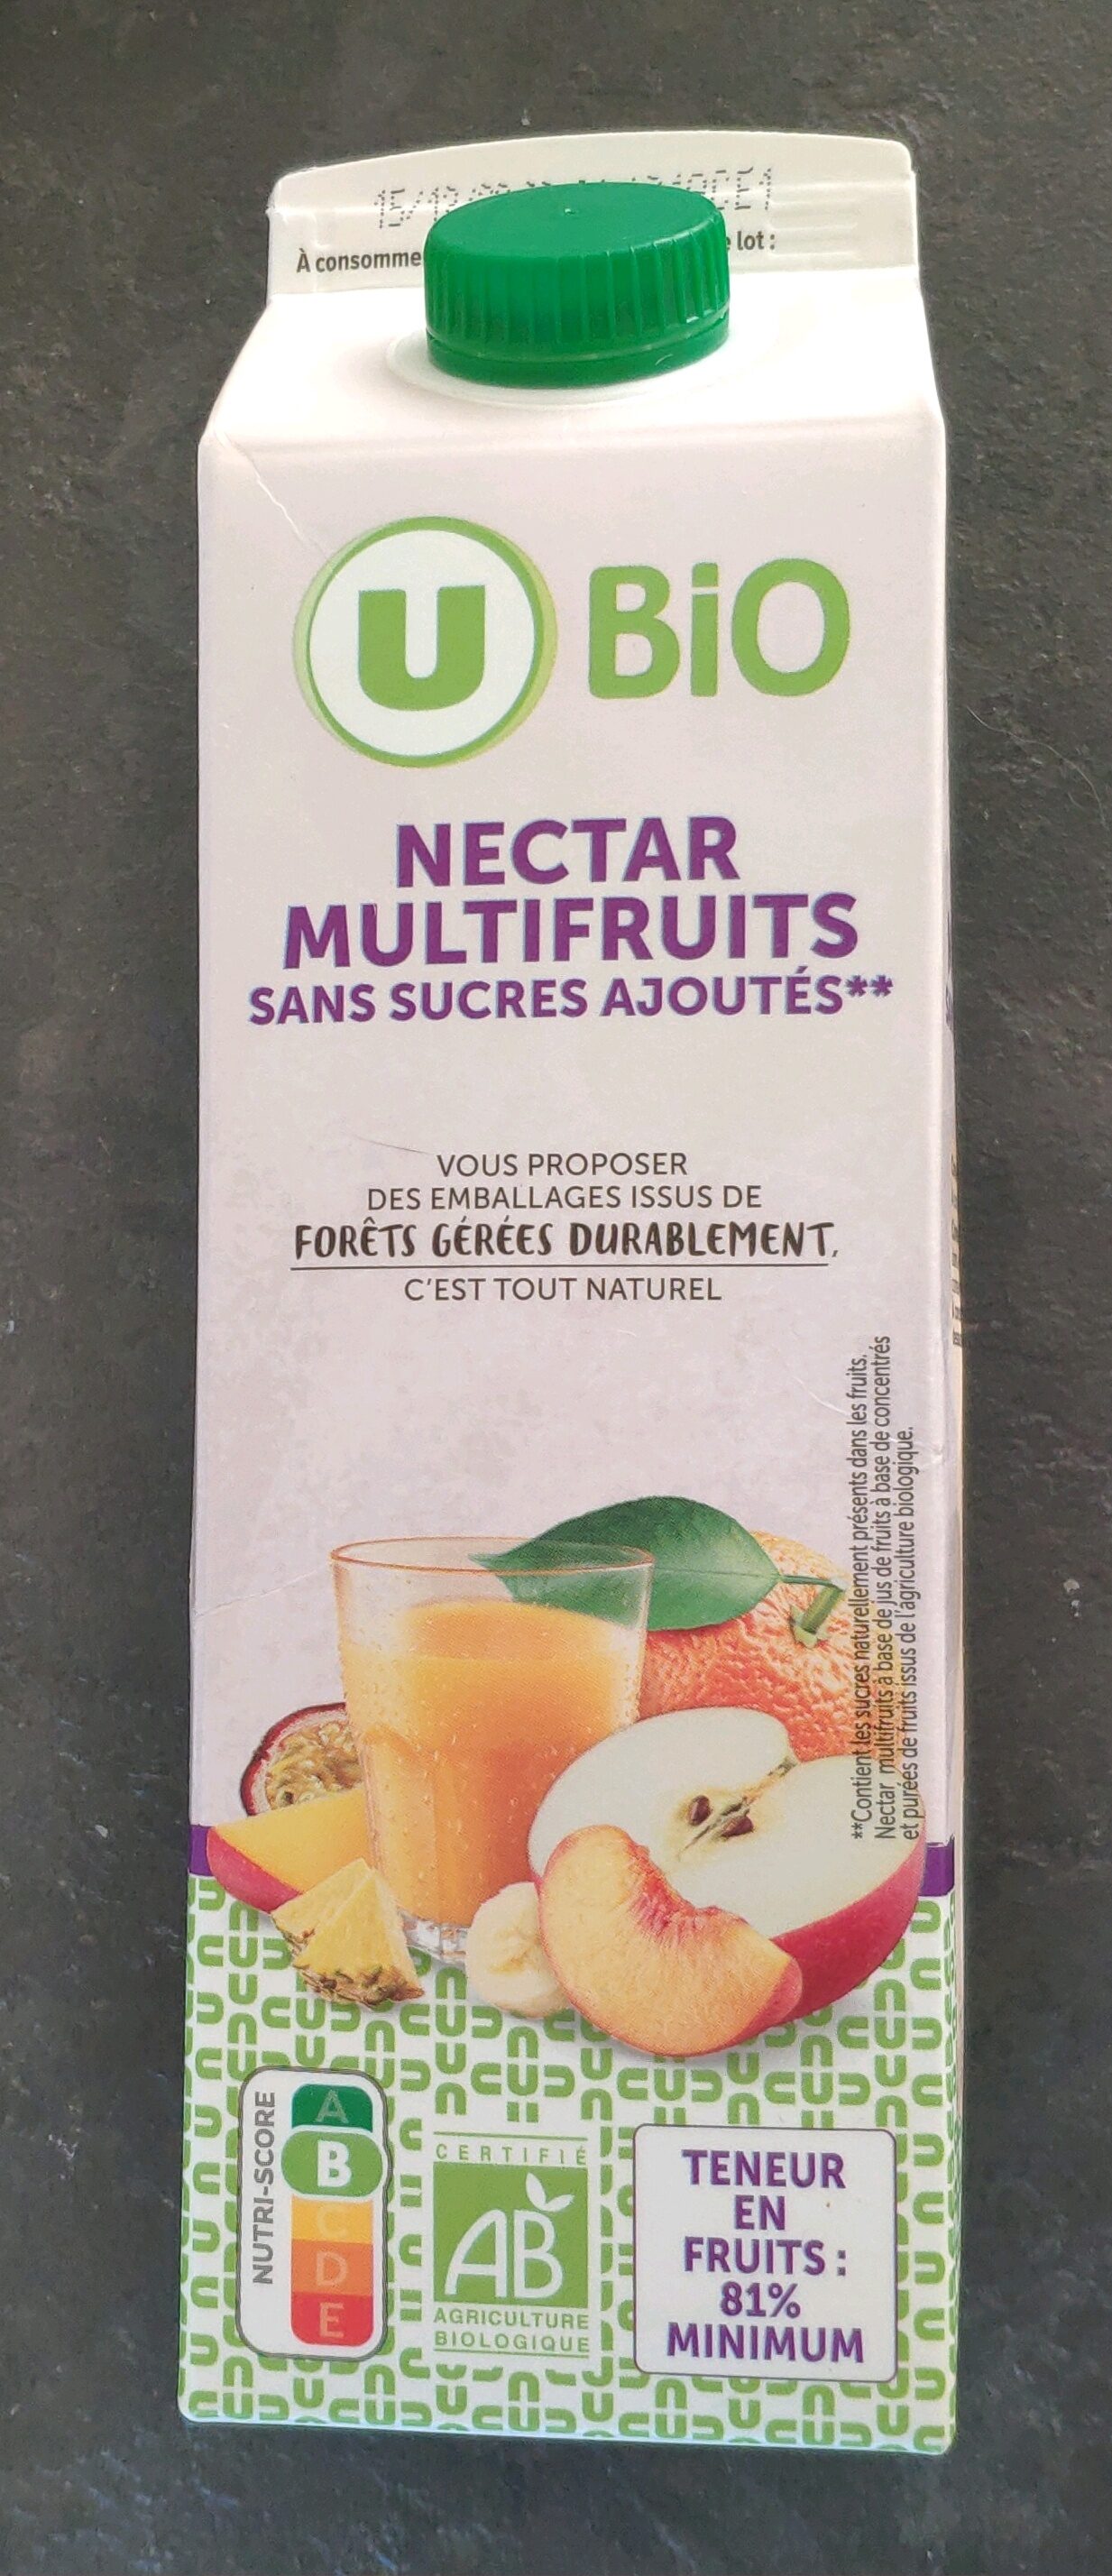 Nectar multifruits - Product - fr